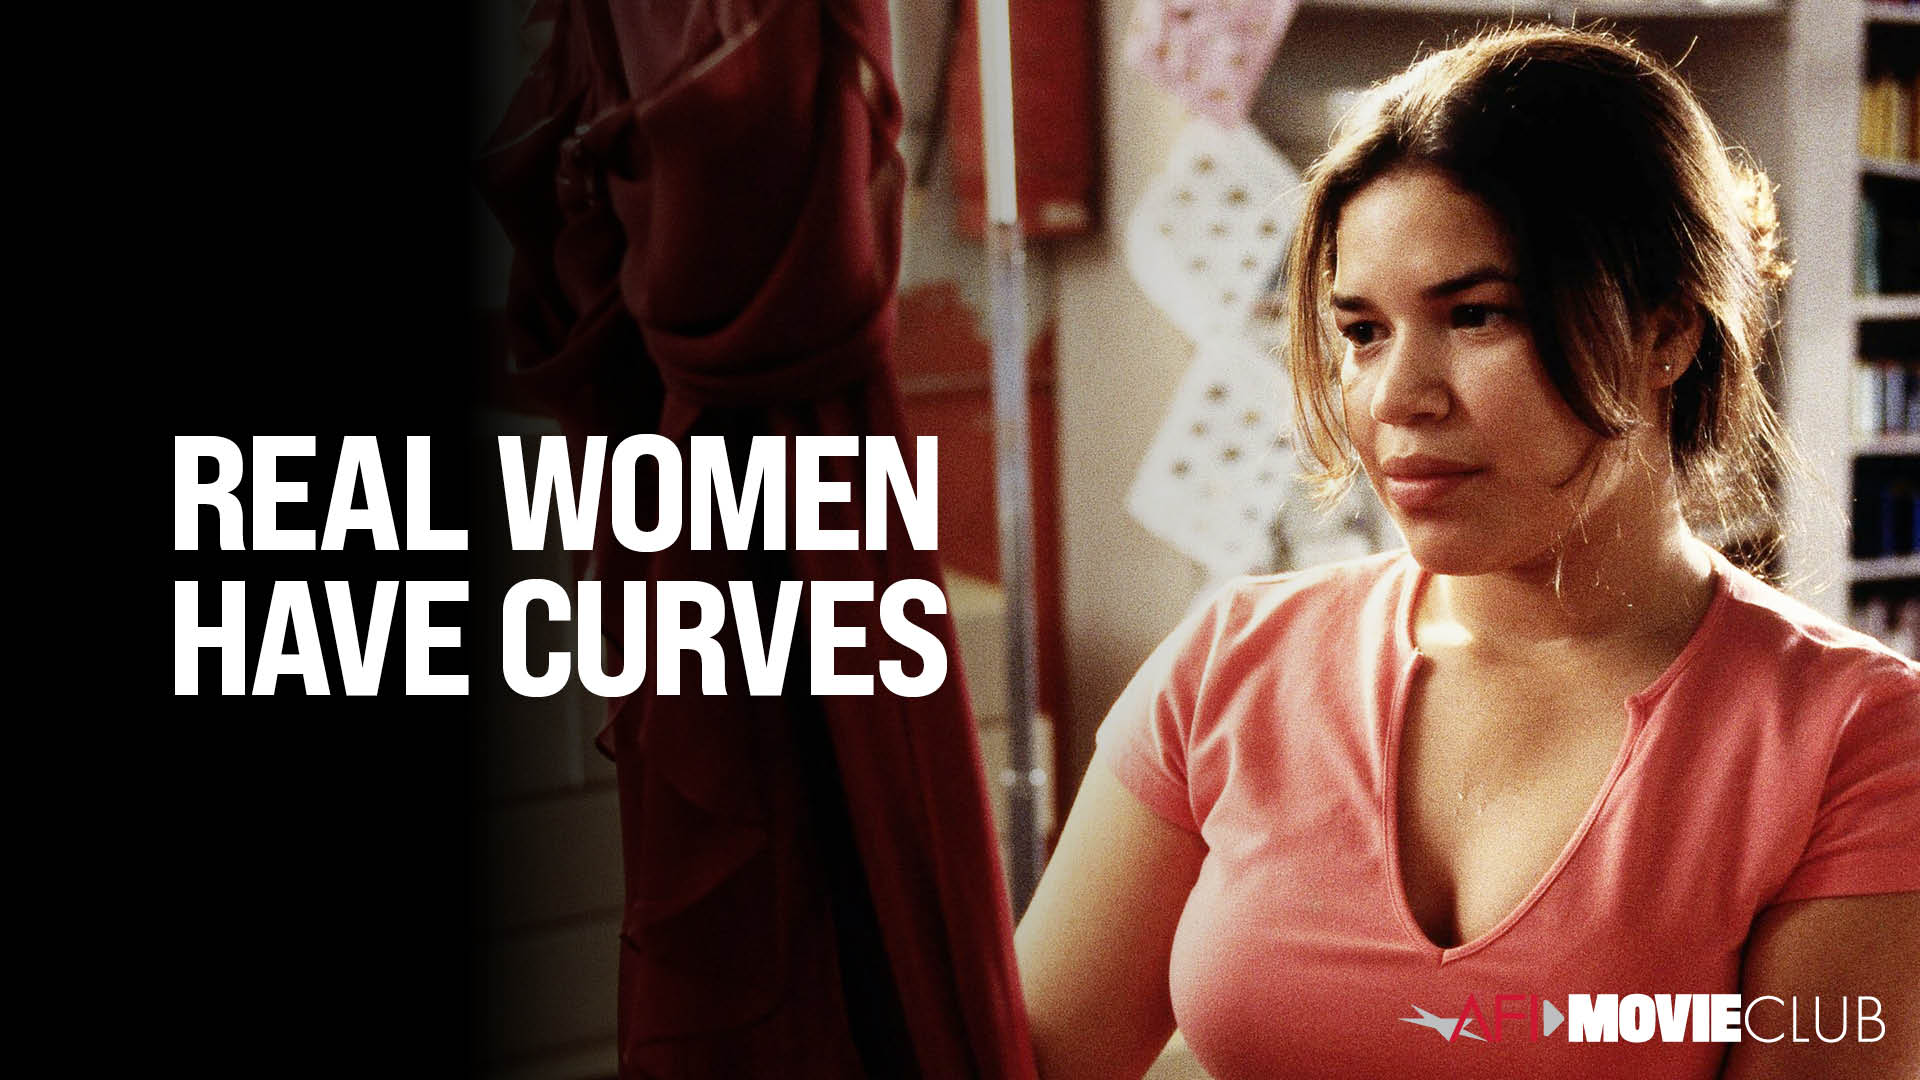 Real Women Have Curves Film Still - America Ferrera